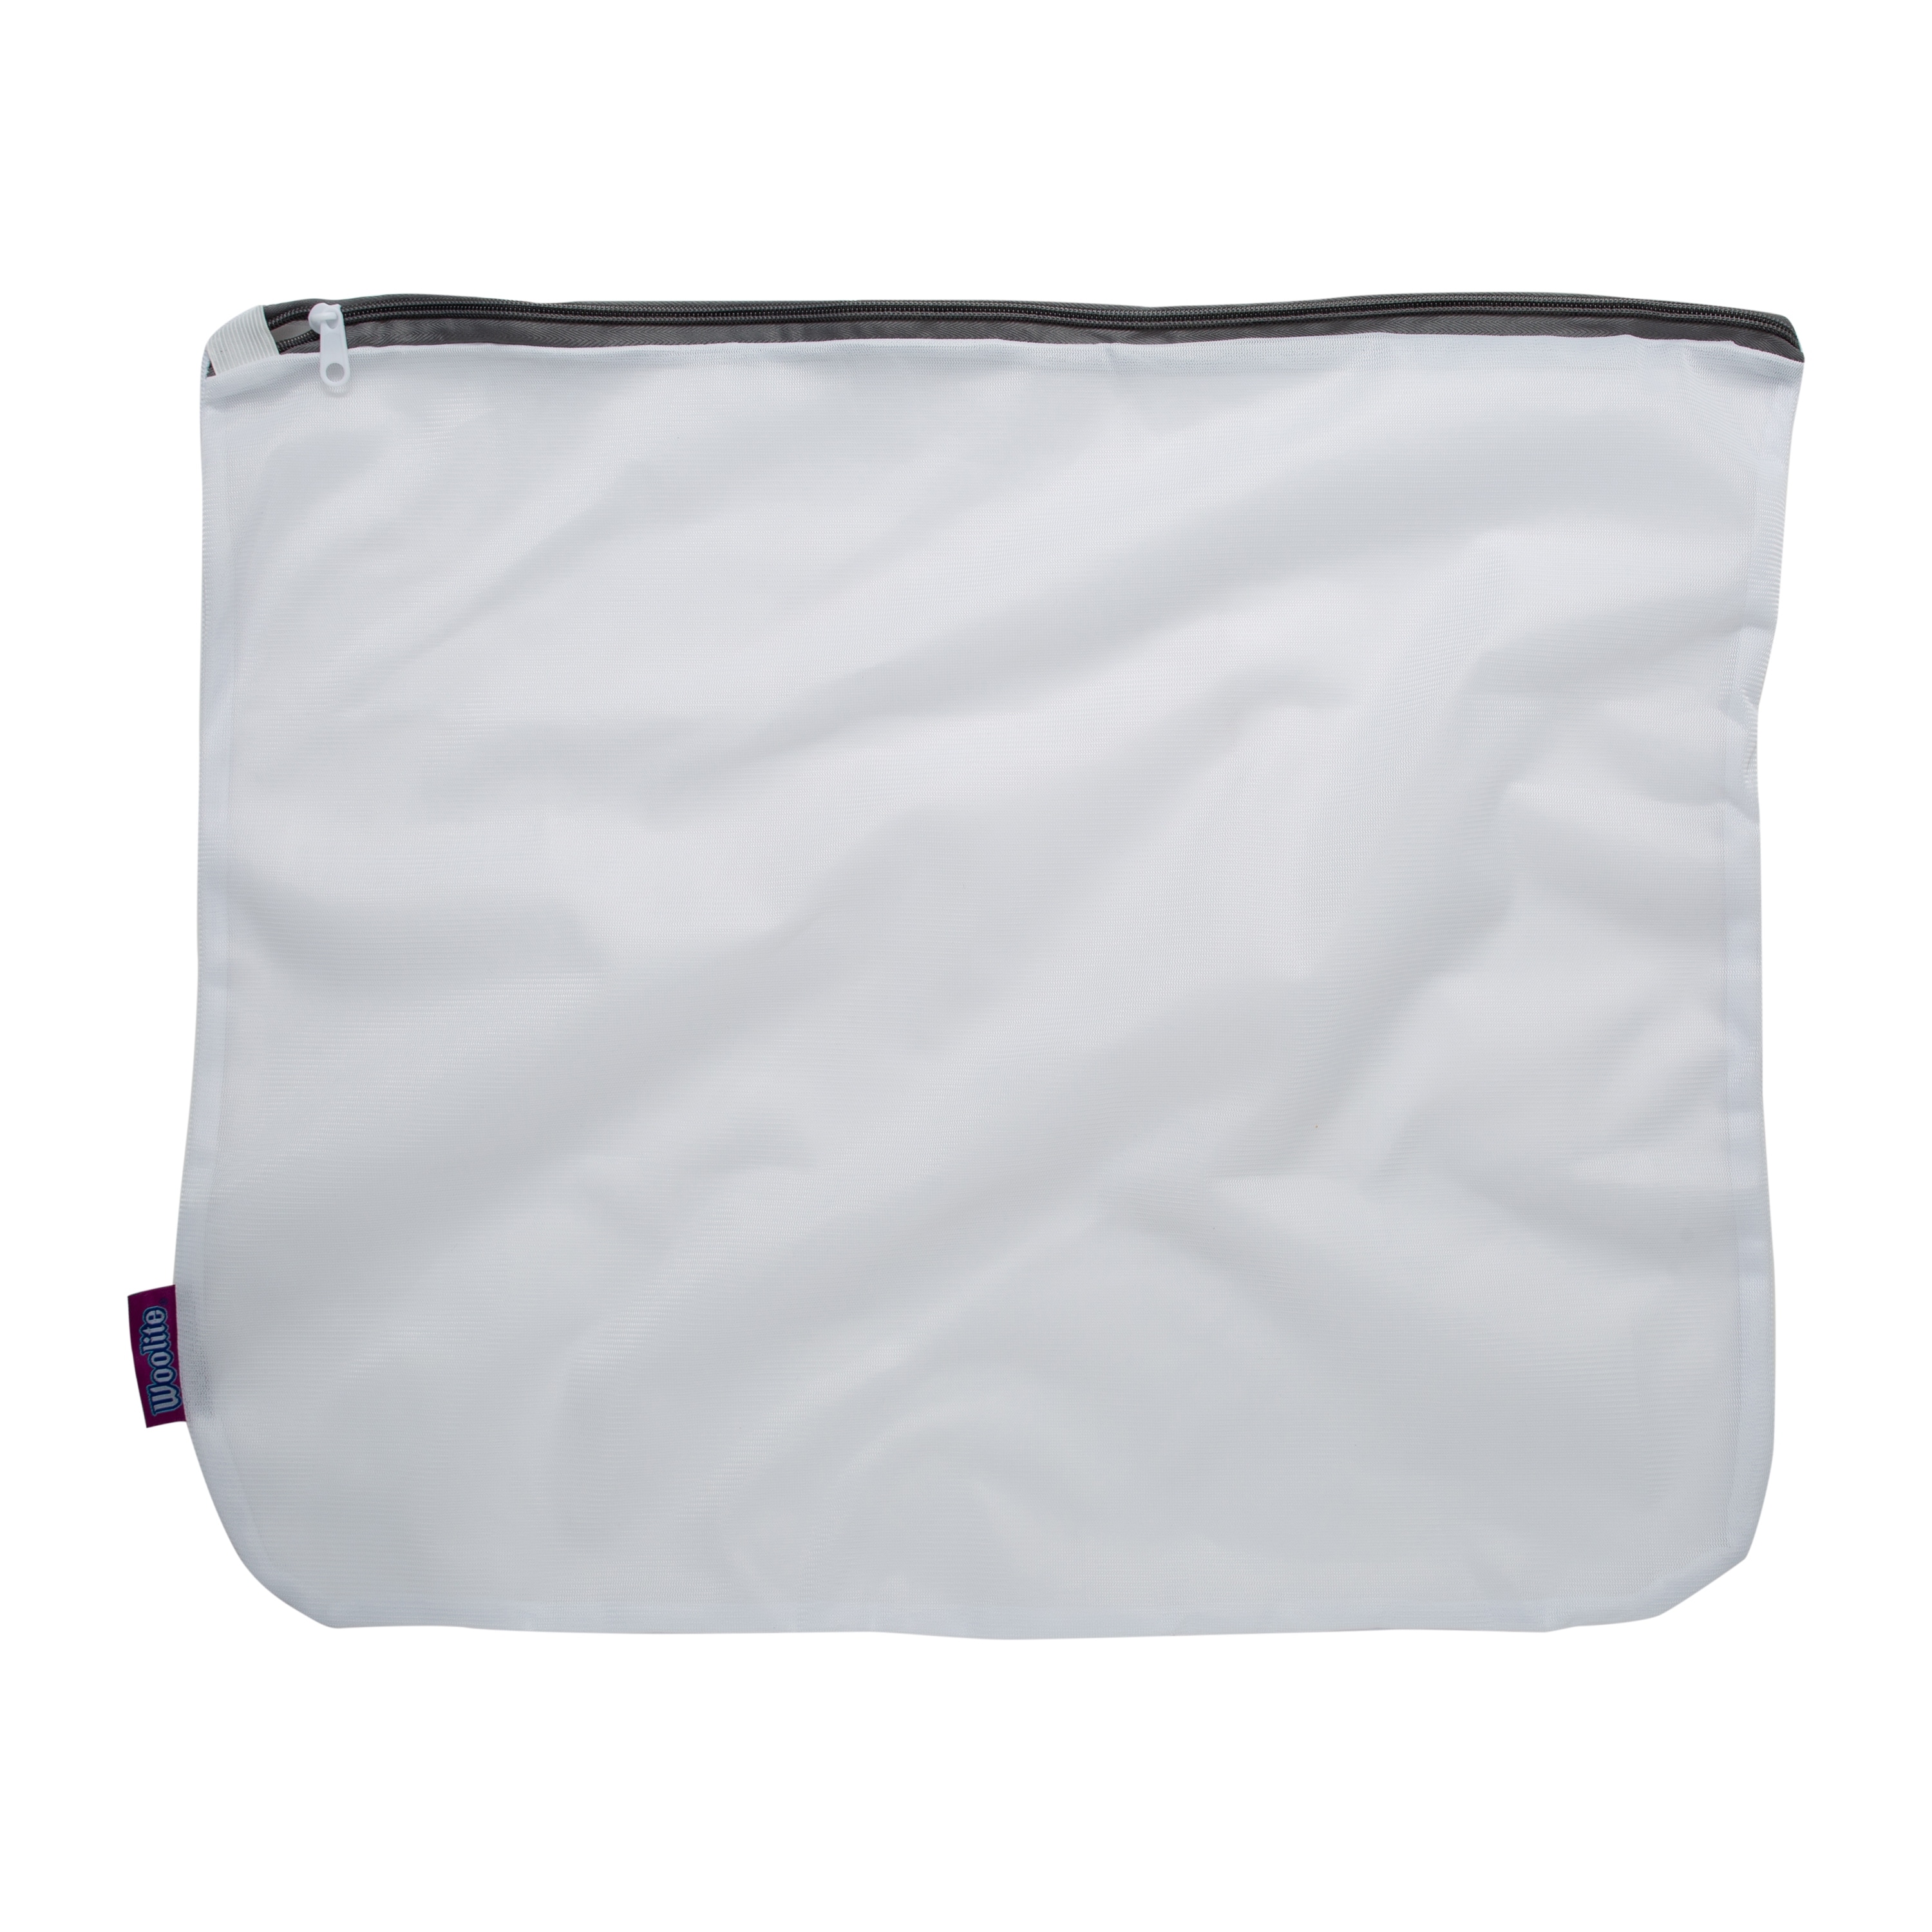 Whitmor Mesh Hosiery Wash Bag White 4-Compartment